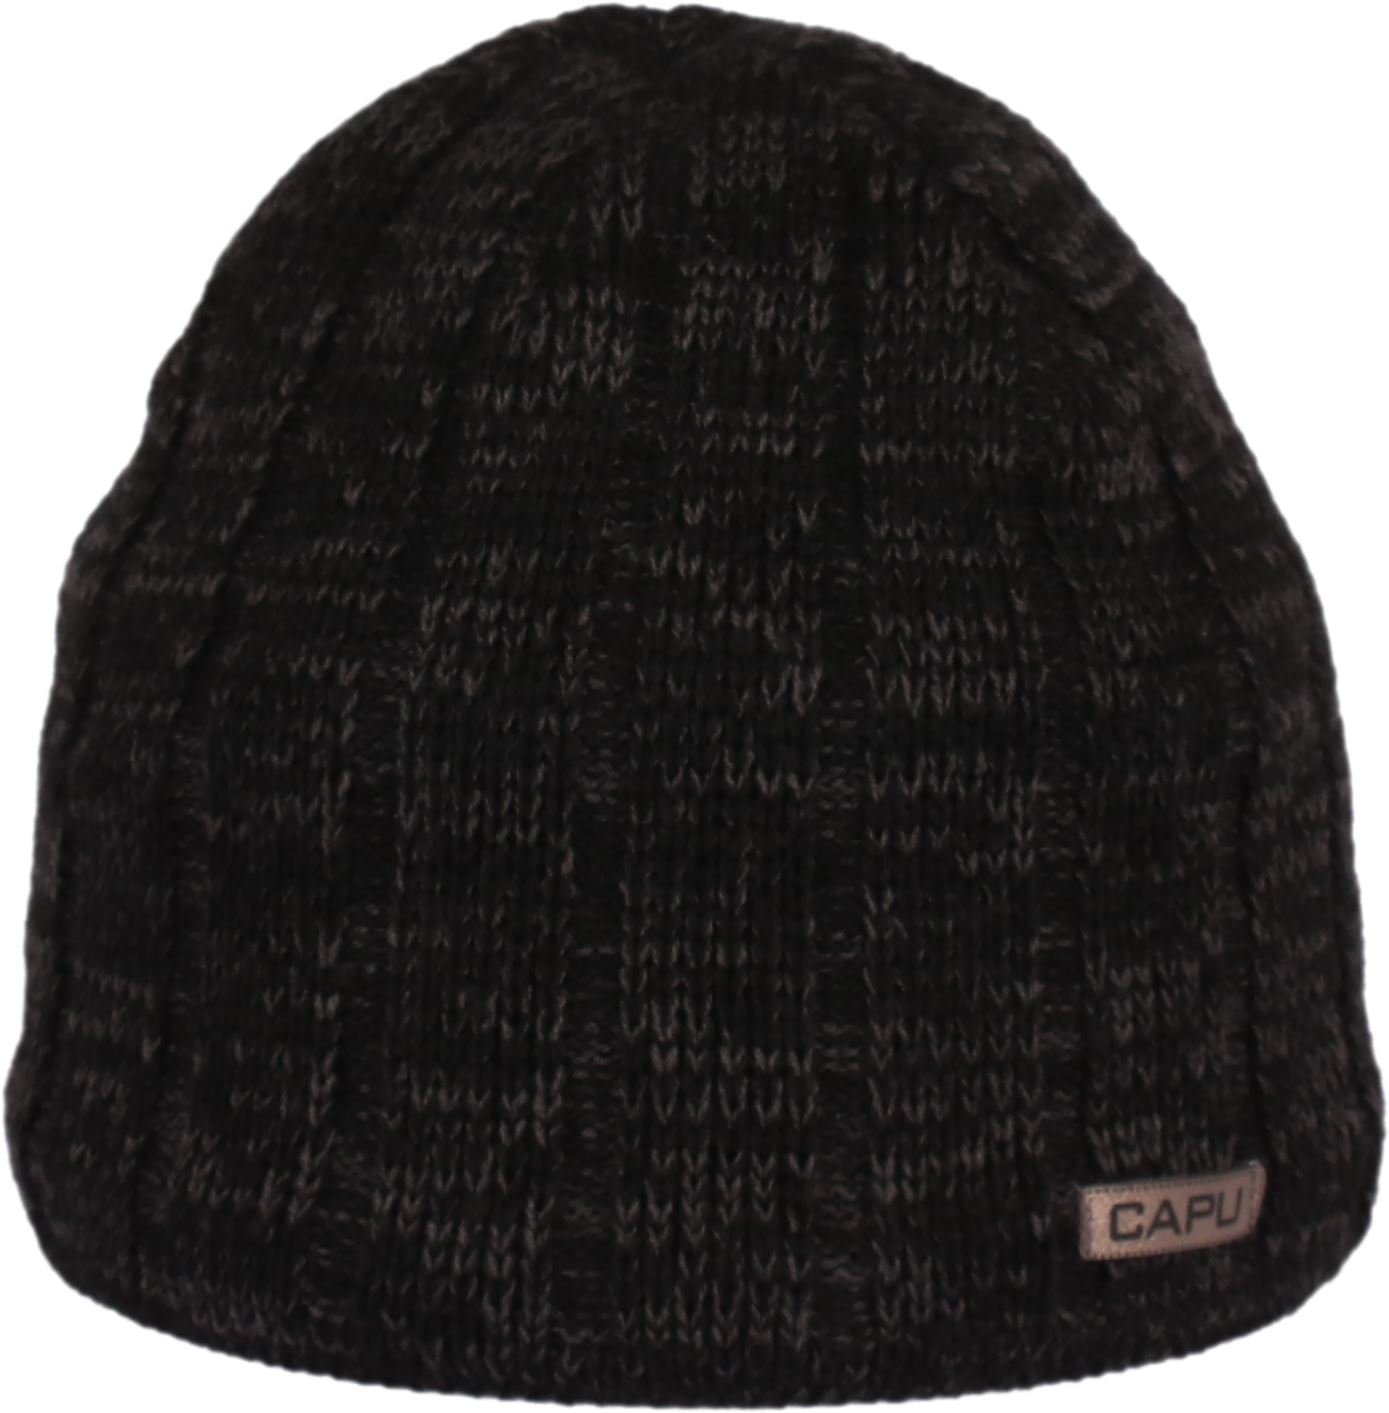 Čepice Capu 735D - černá